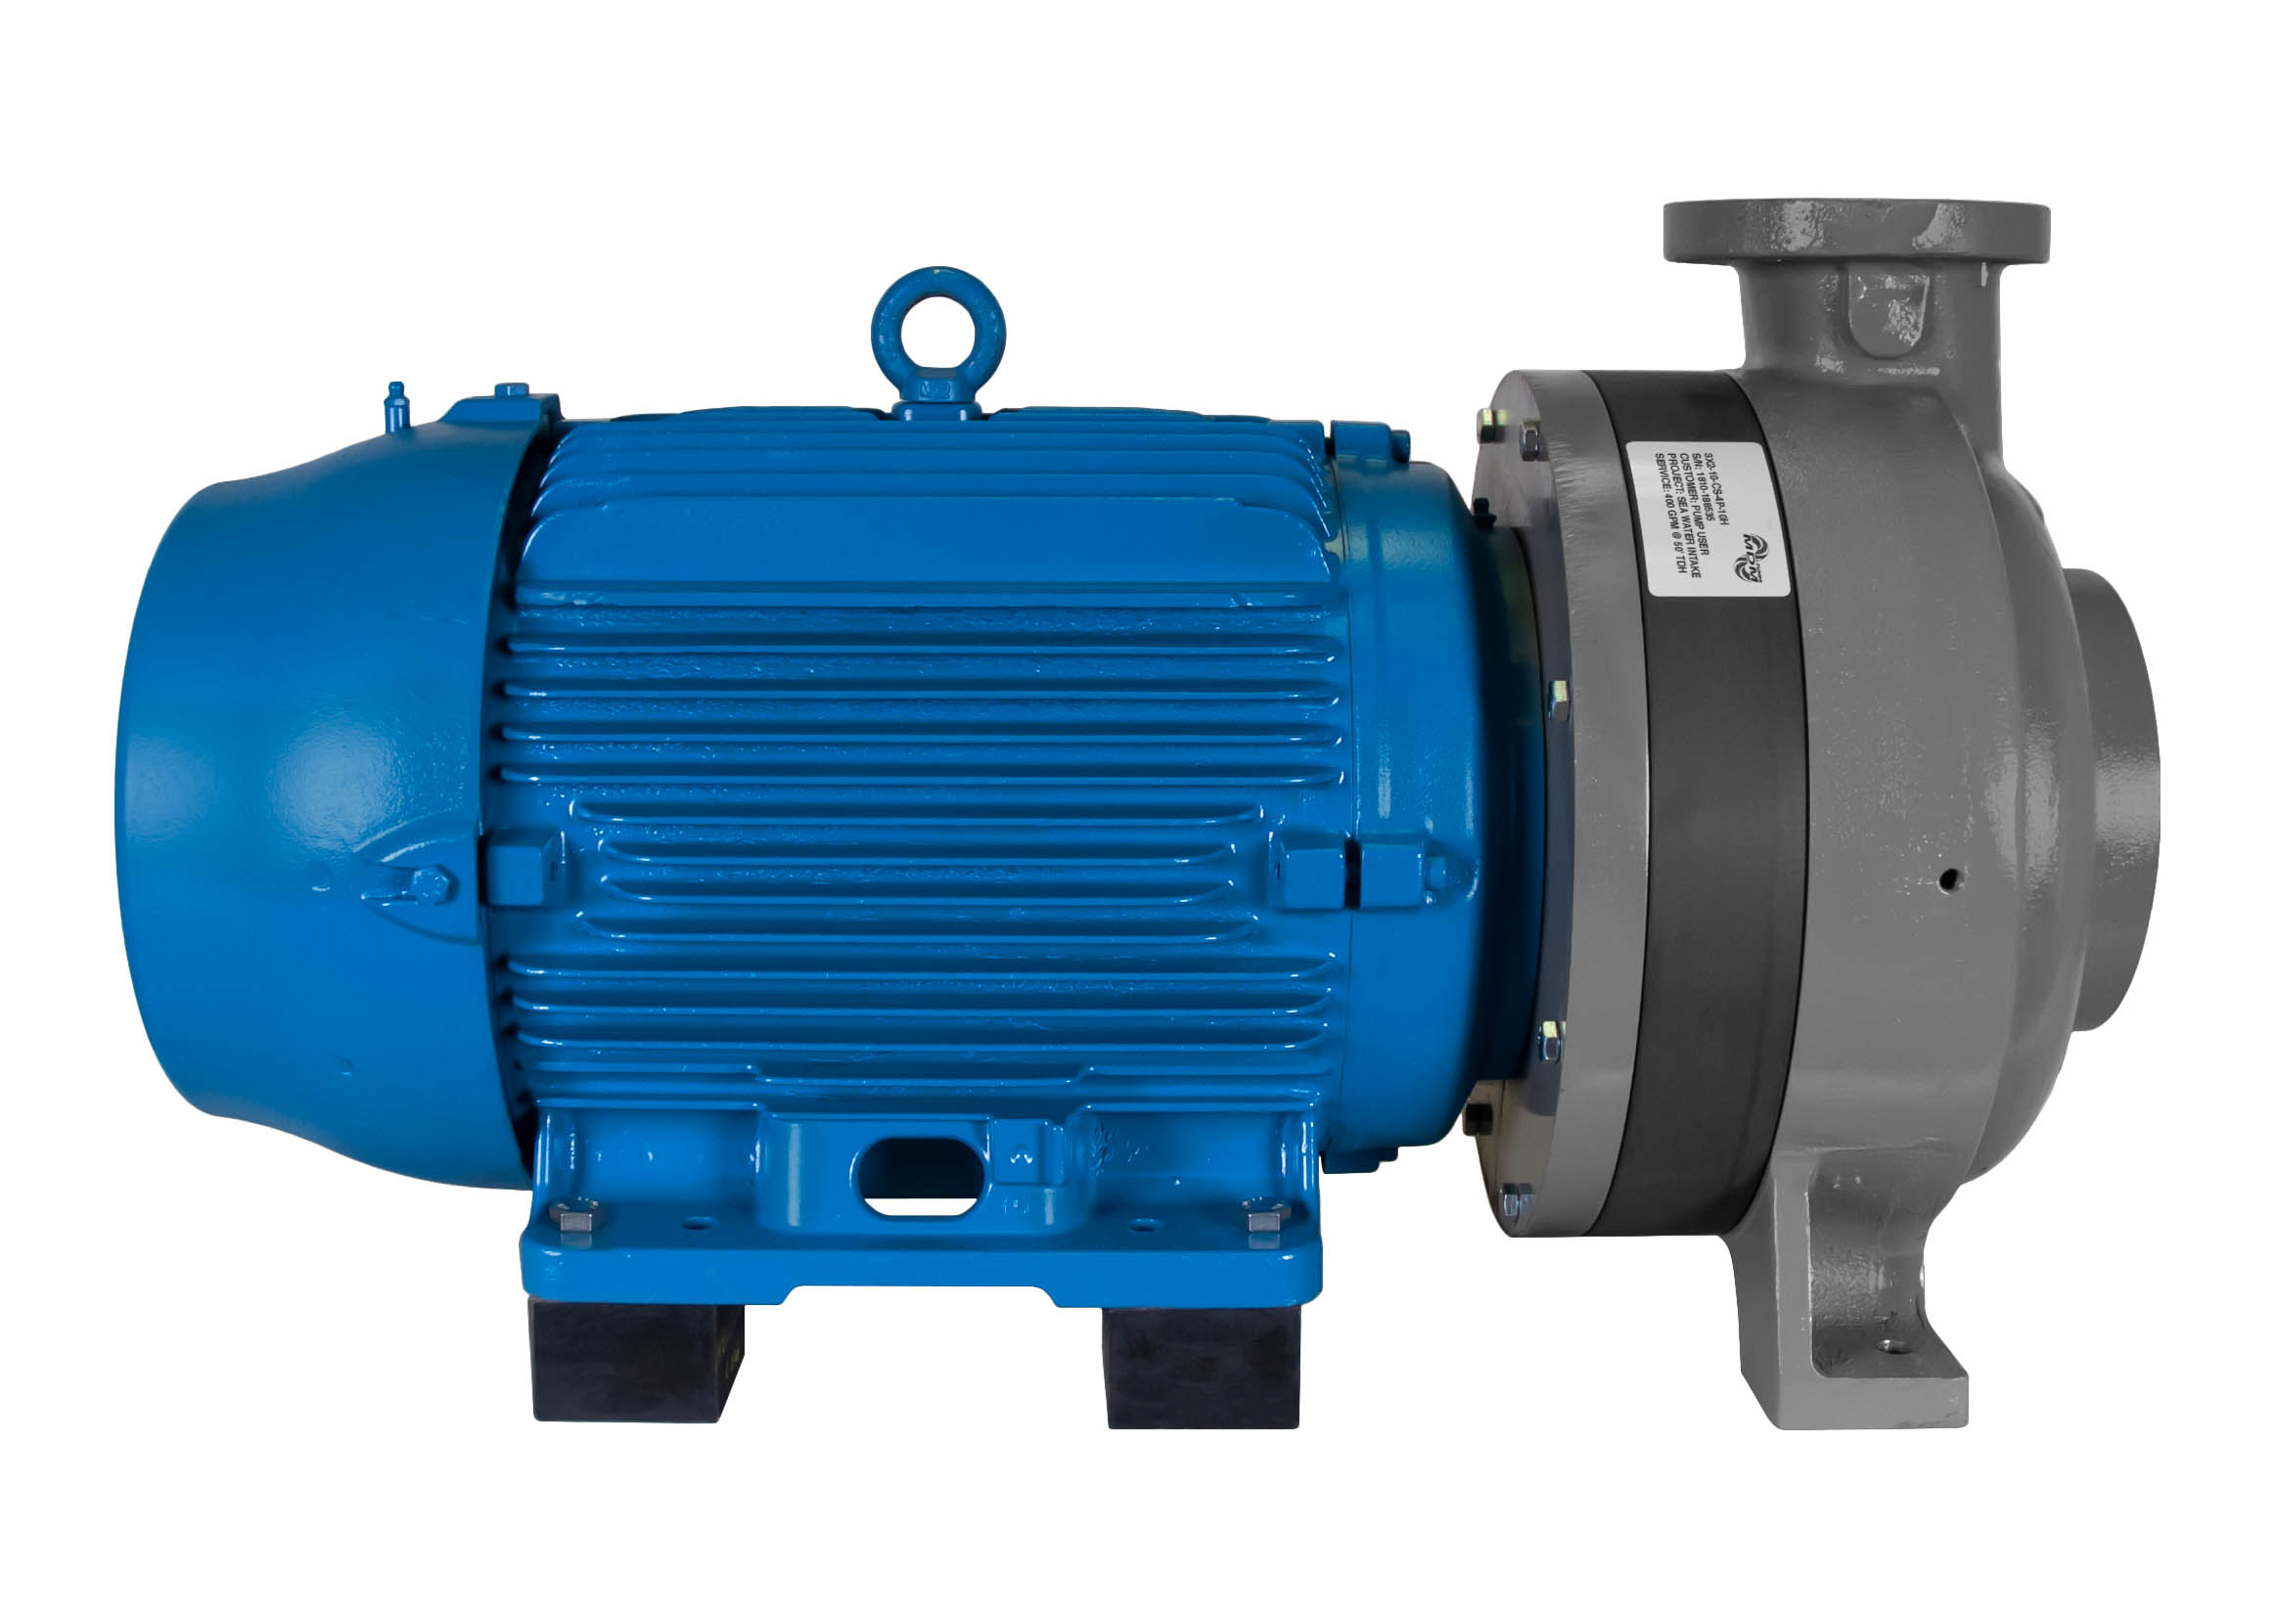 C-Shell 3x2-10 Pump with blue WEG Motor left side view